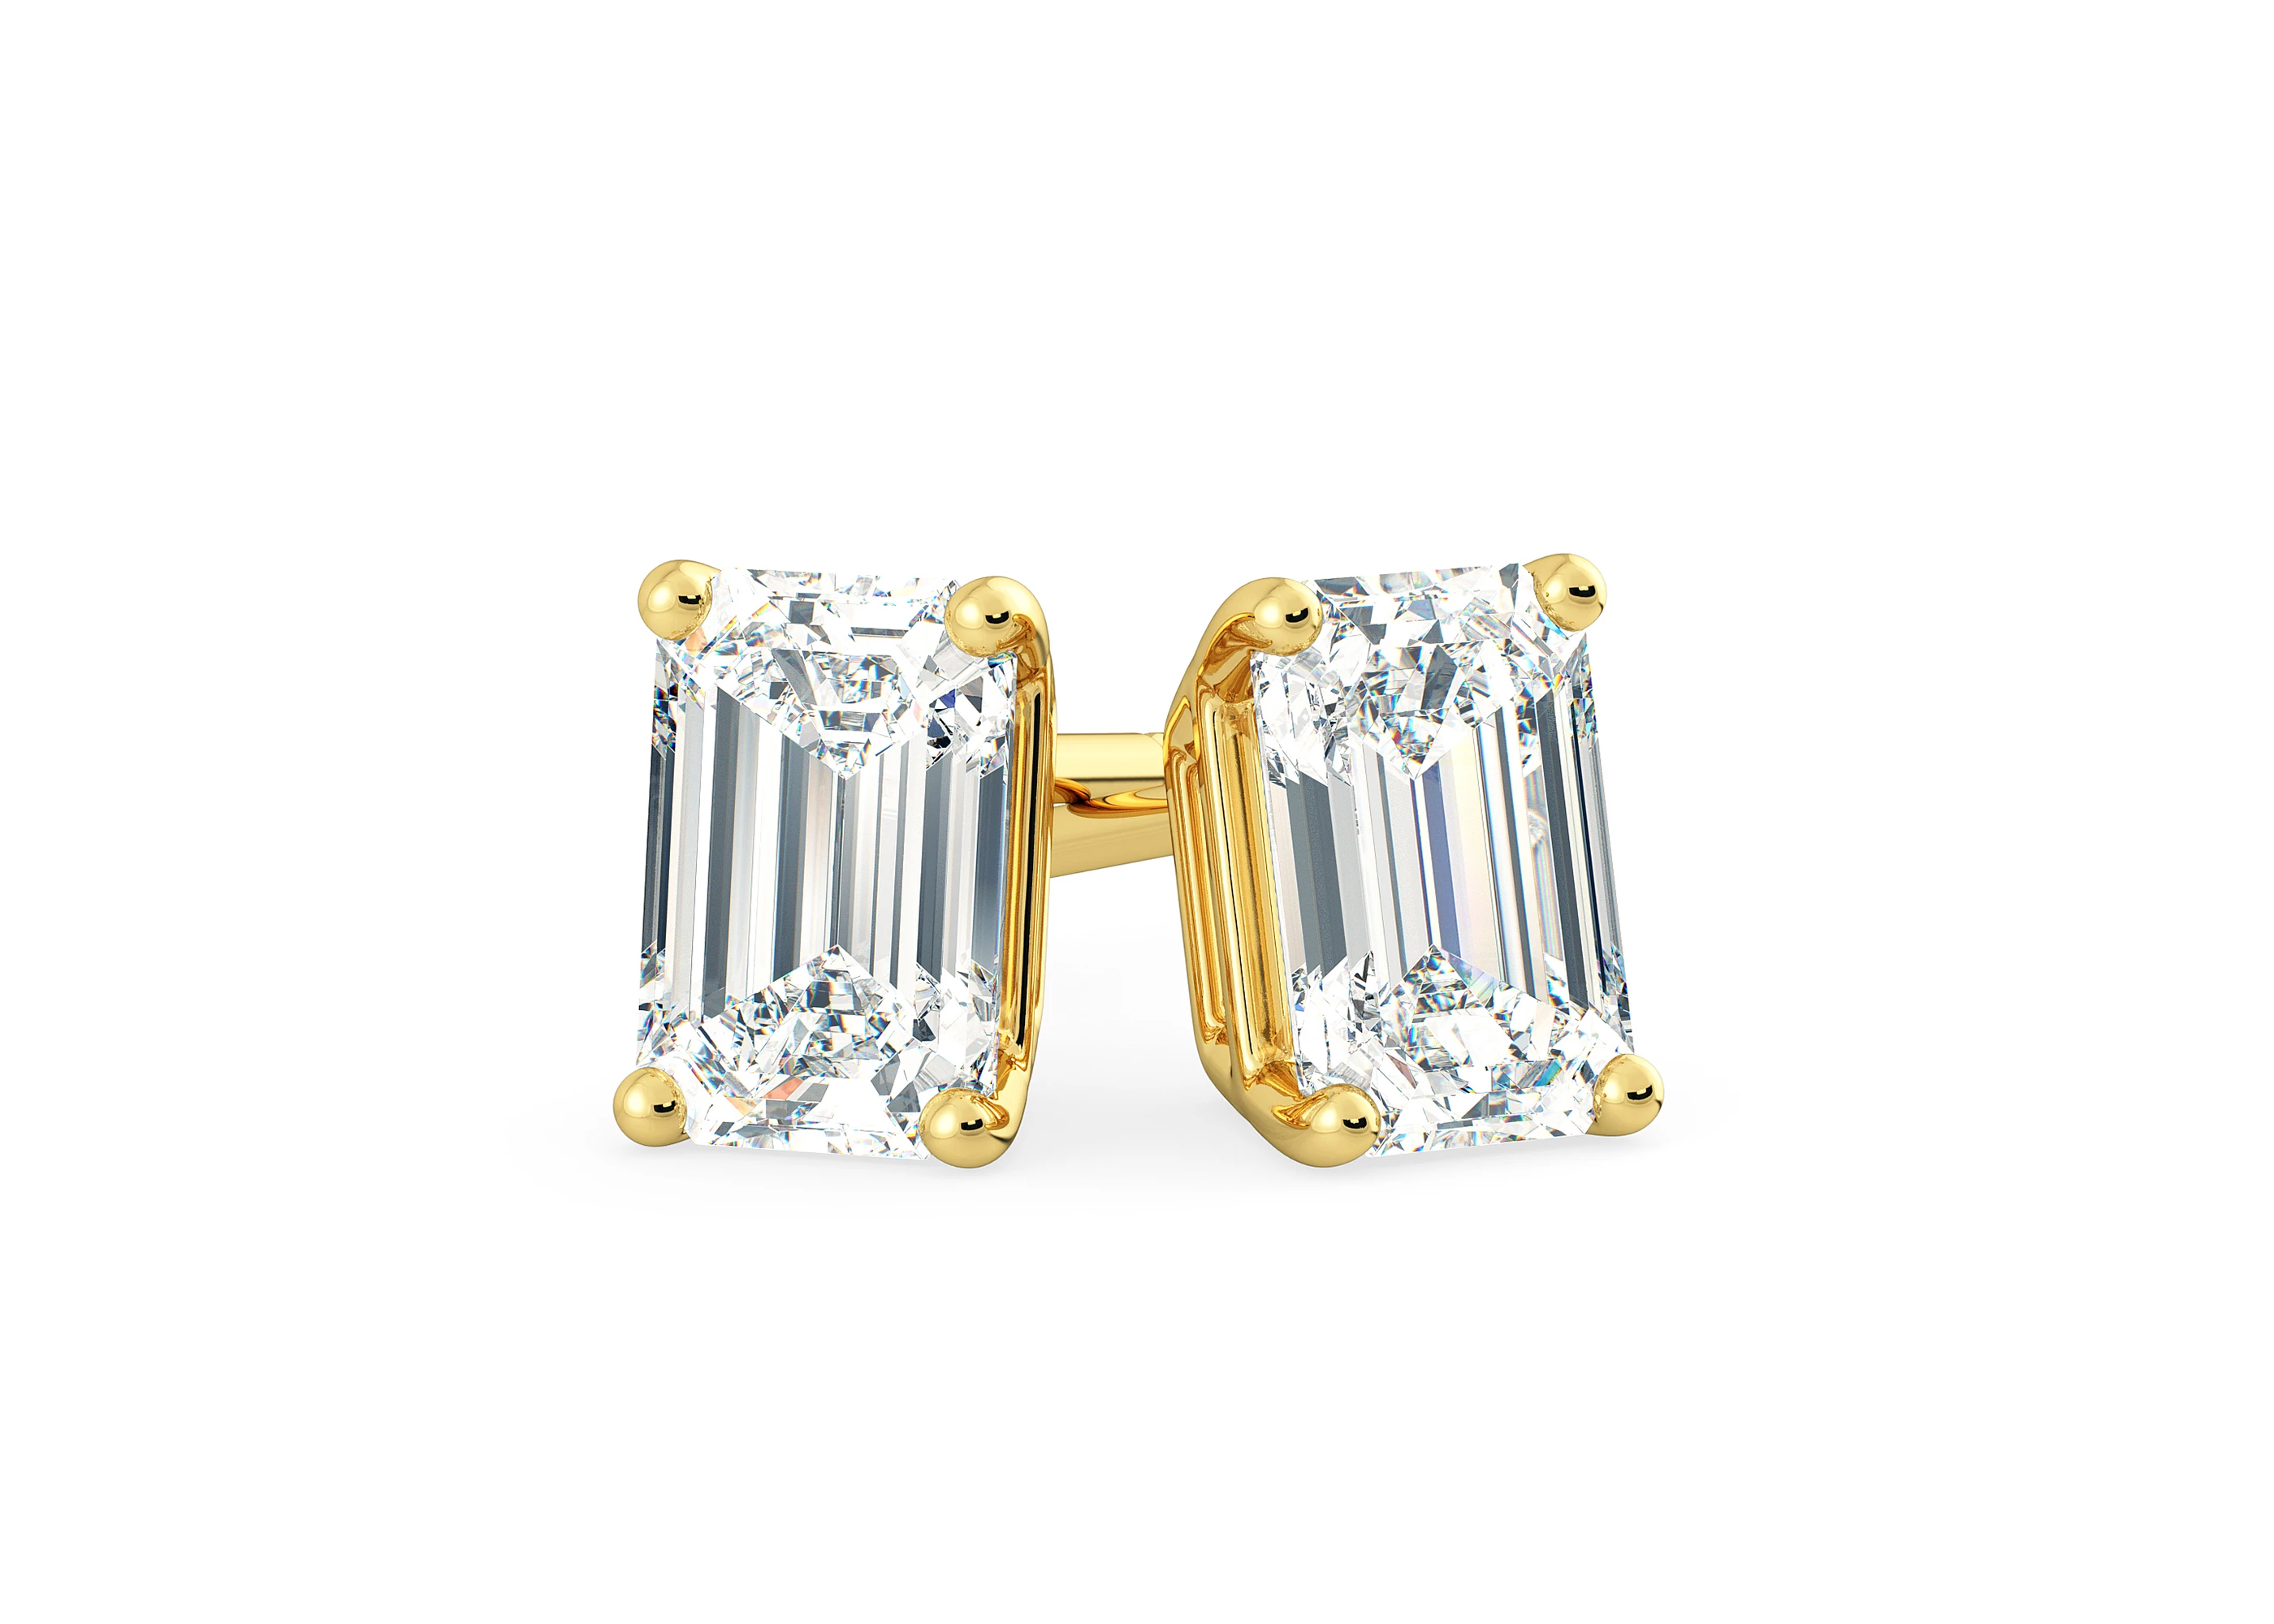 One Carat Emerald Diamond Stud Earrings in 18K Yellow Gold